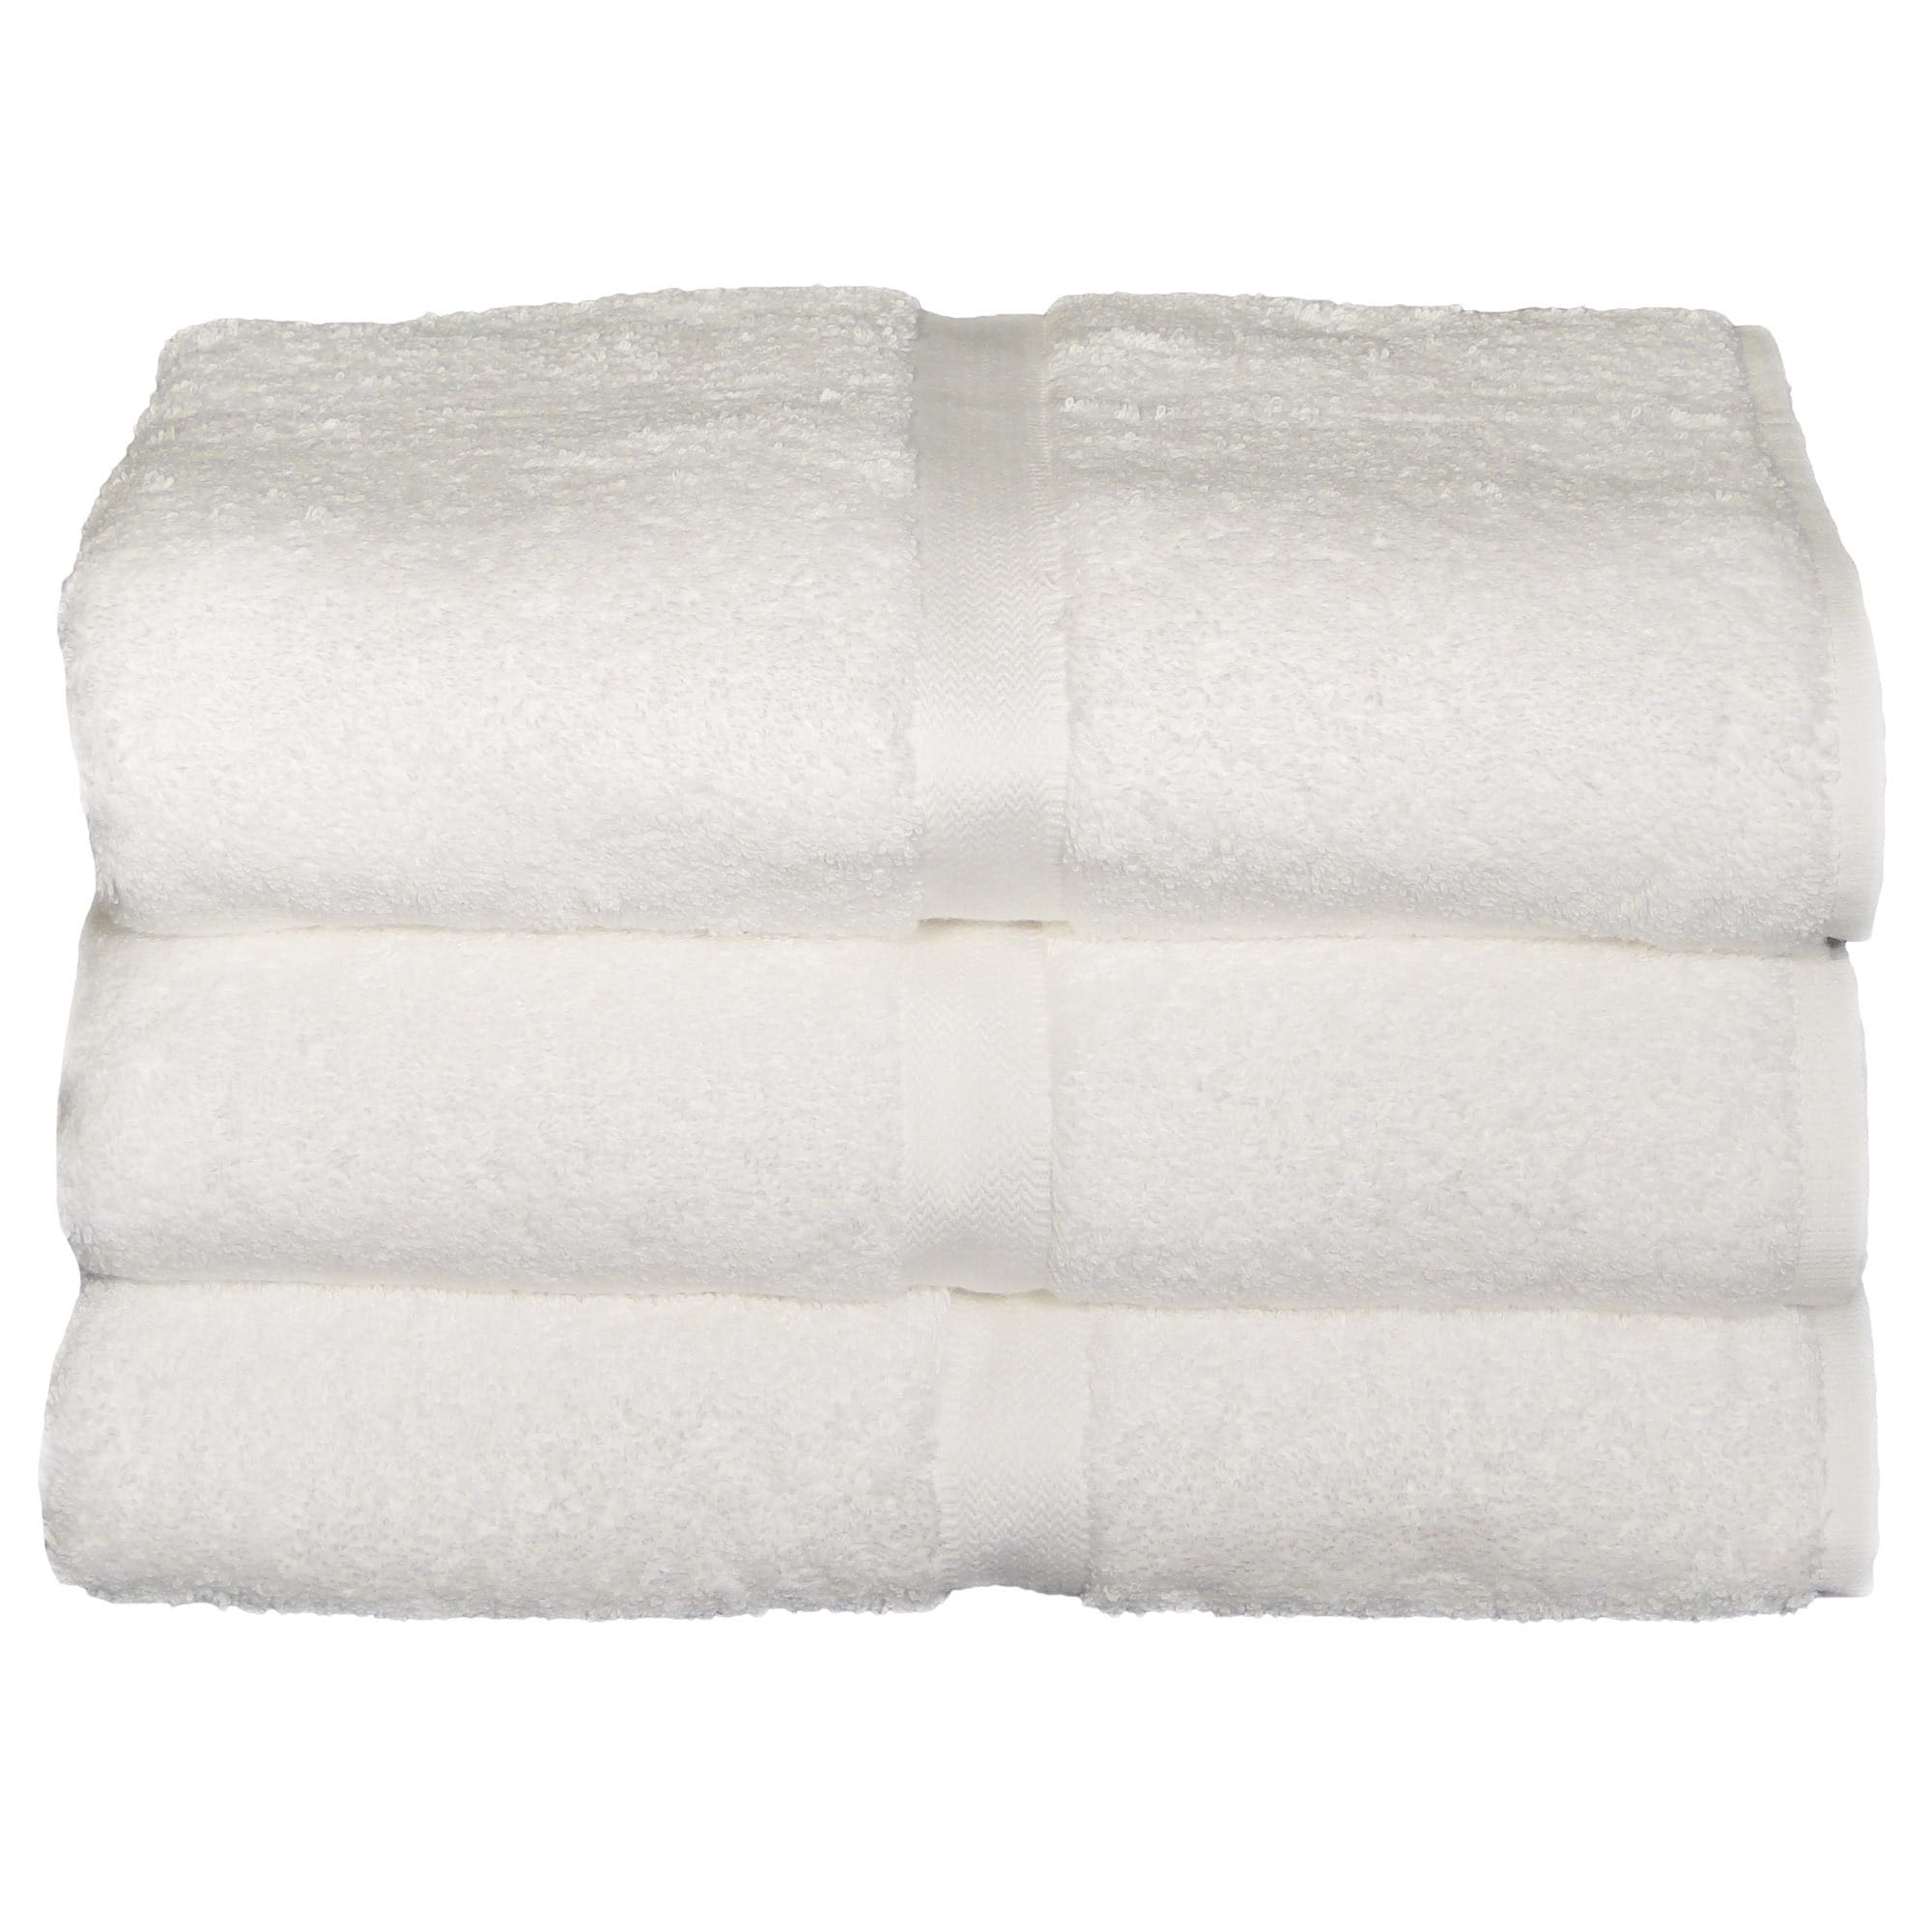 12 Wholesale Soft Durable Absorbent White Bath Towel Size 30x54